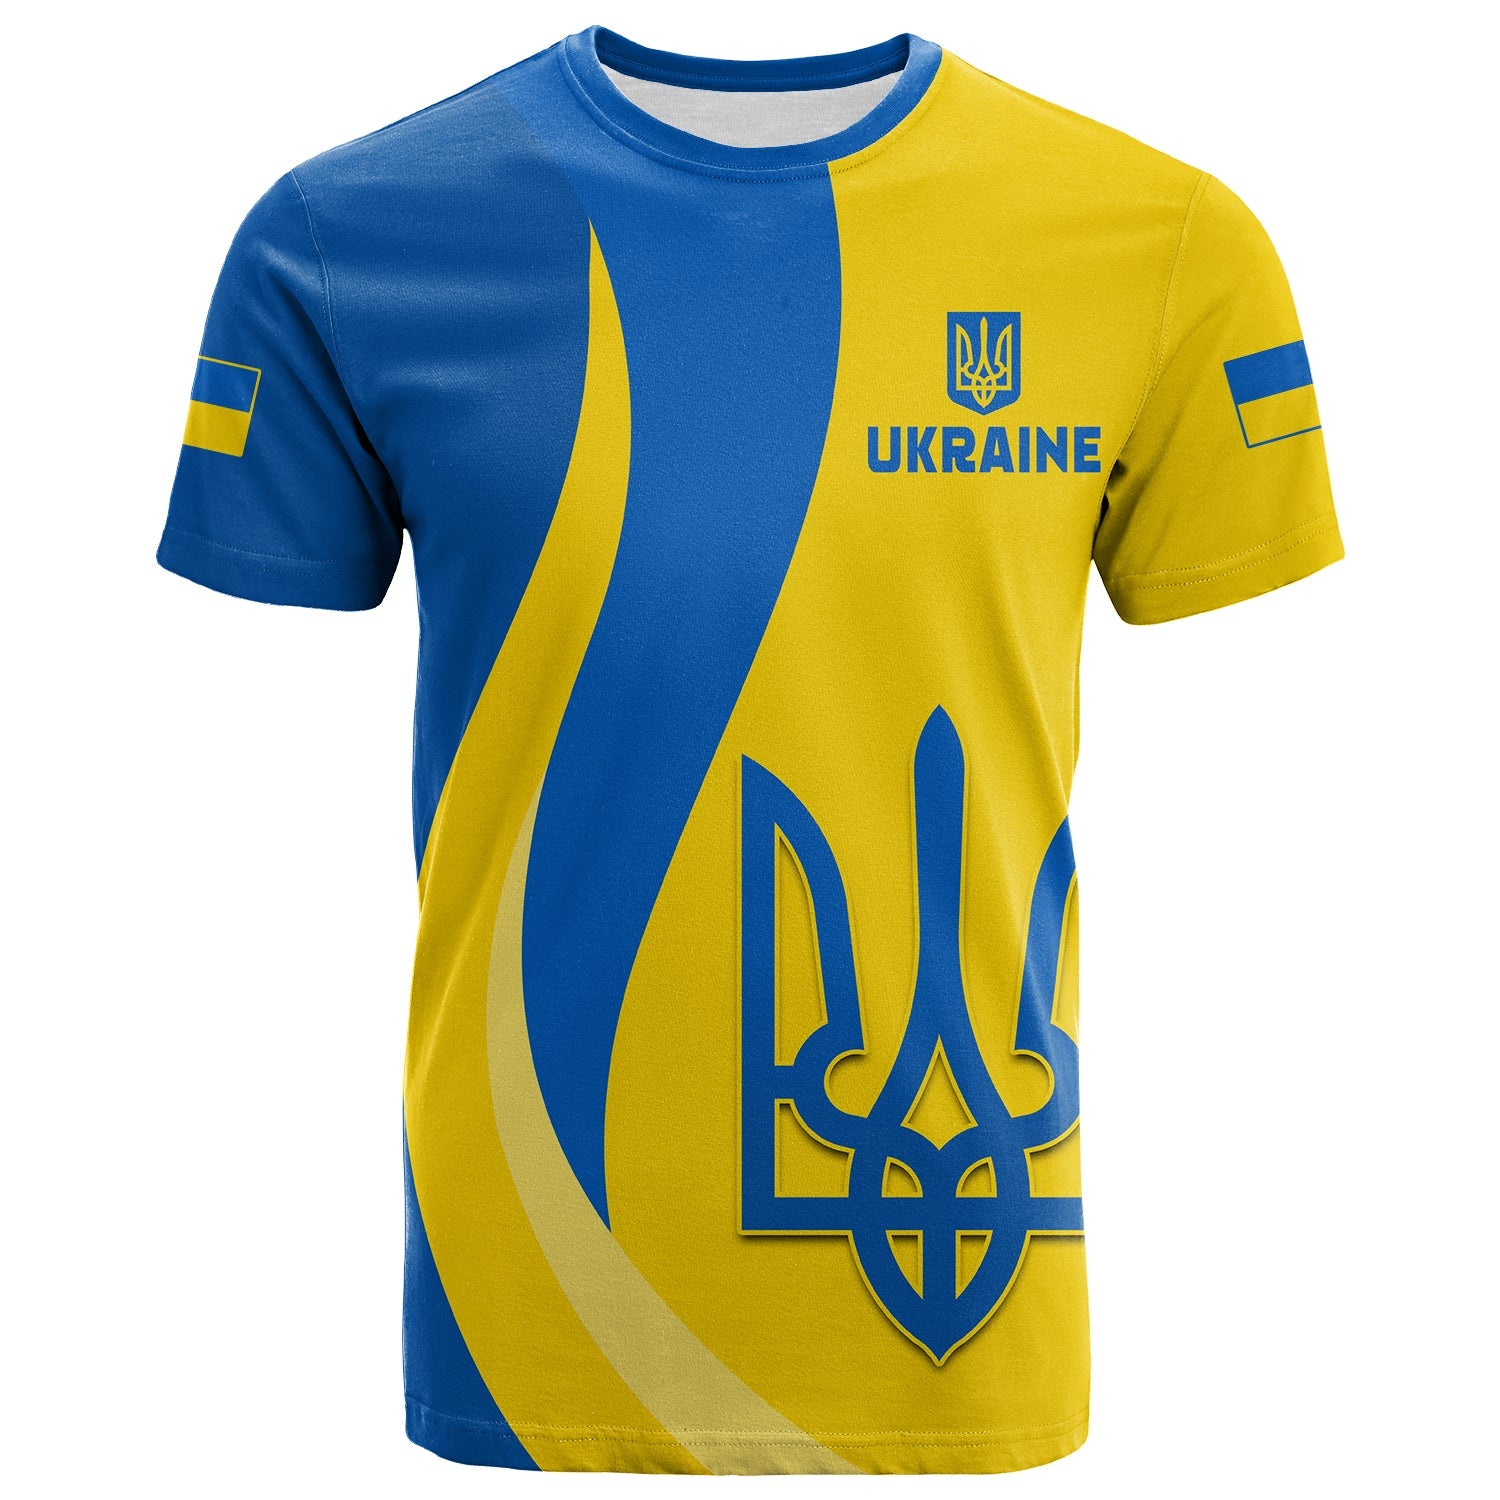 ukraine-t-shirt-always-proud-ukraine